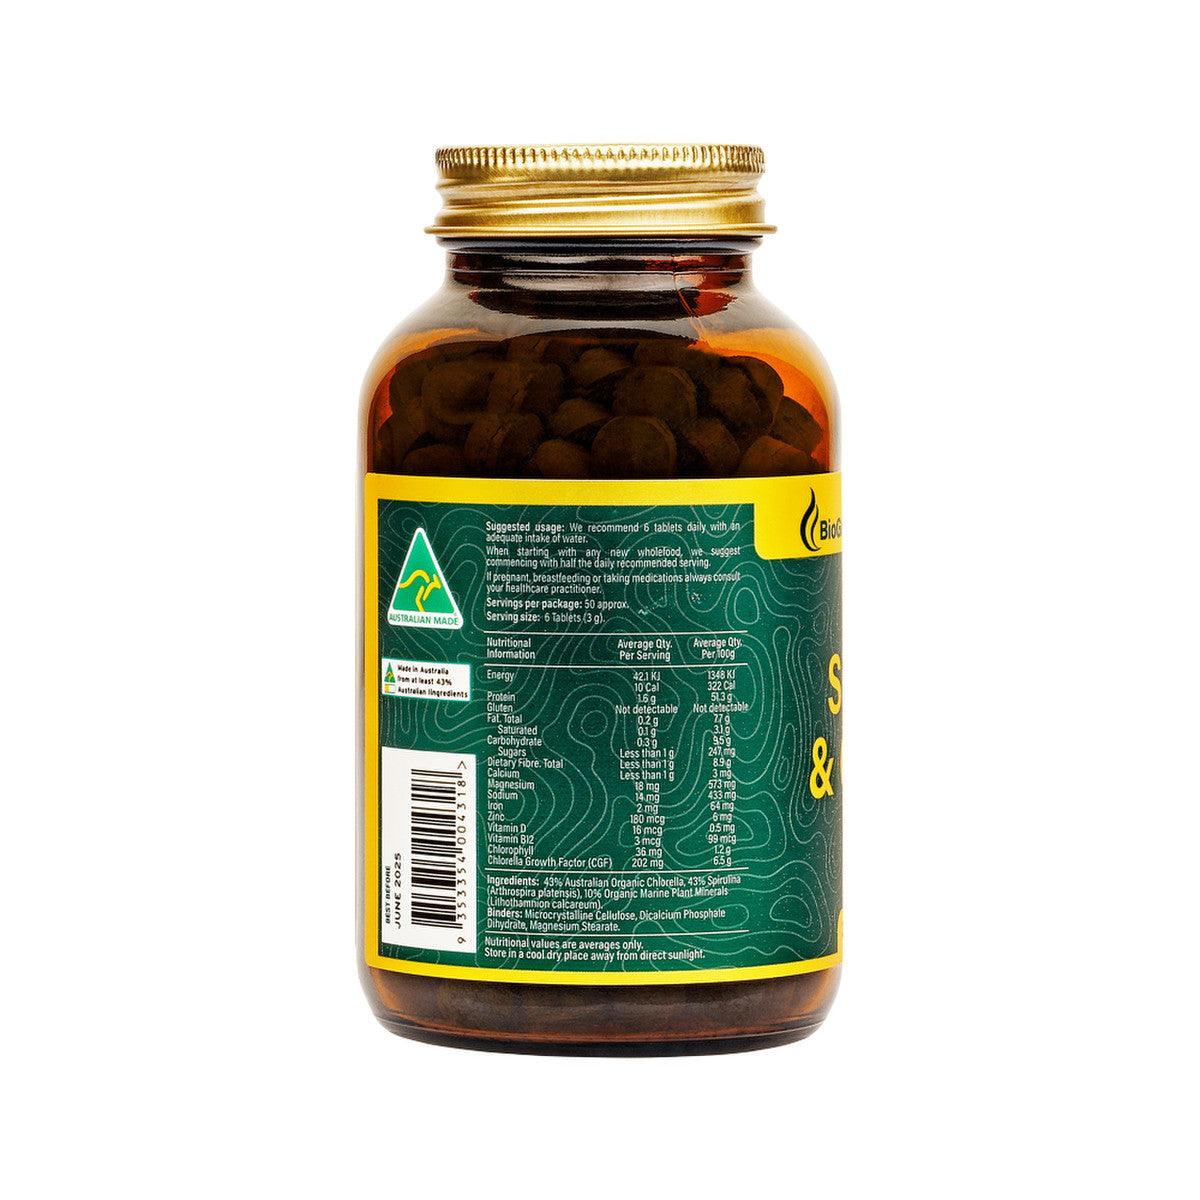 BioGenesis Spirulina and Chlorella with Organic Marine Plant Minerals 500mg 300 Tablets - QVM Vitamins™